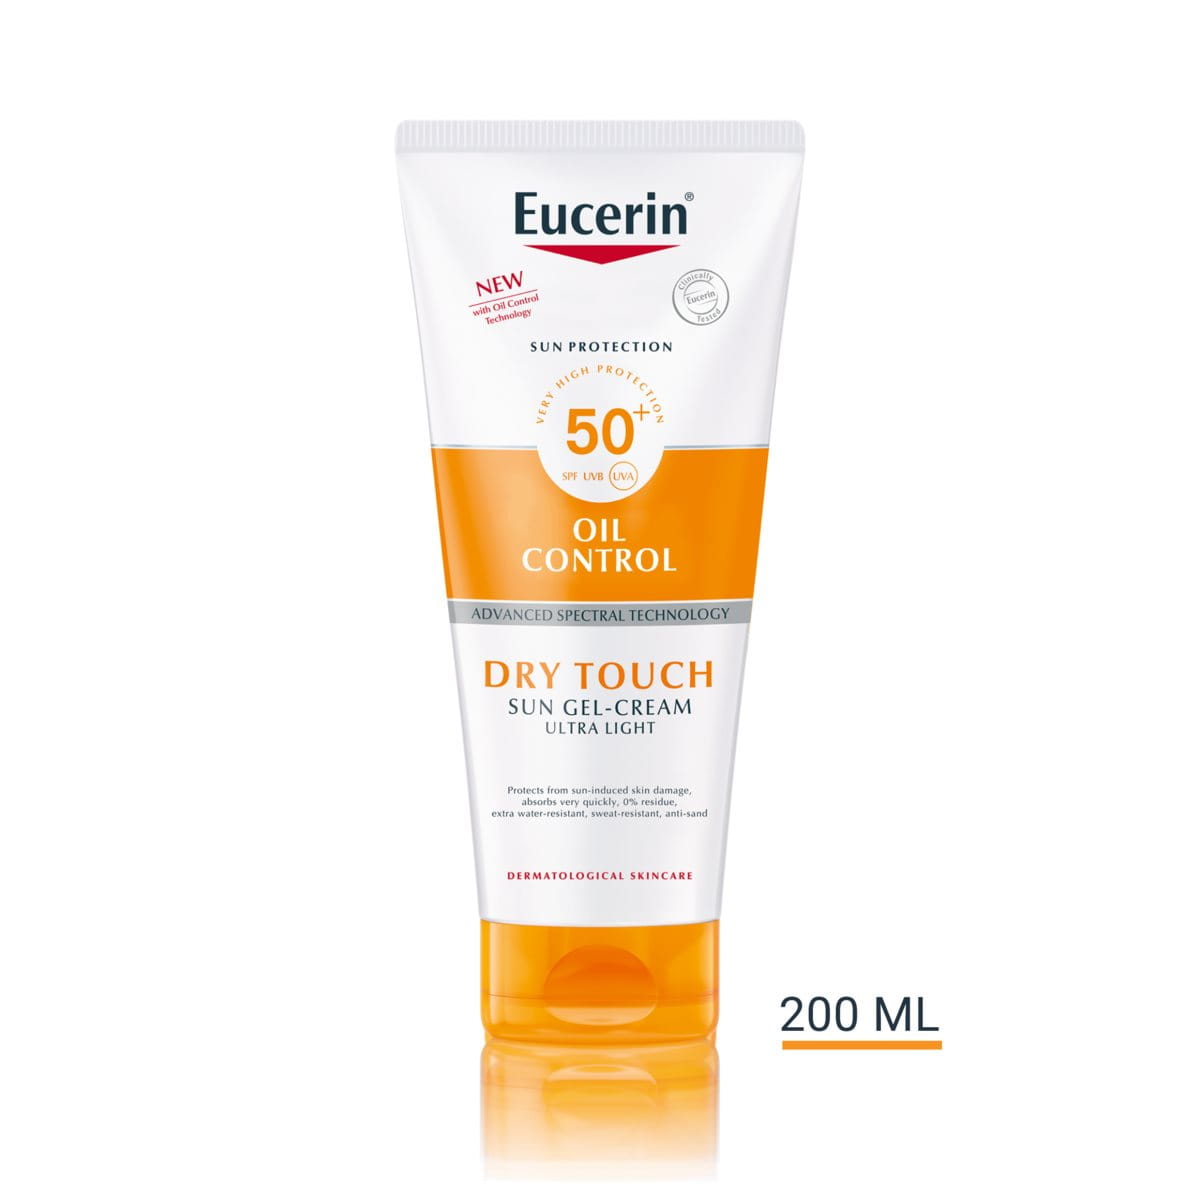 Eucerin Sun Gel-Cream Oil Control Spf 50+ ingredients (Explained)